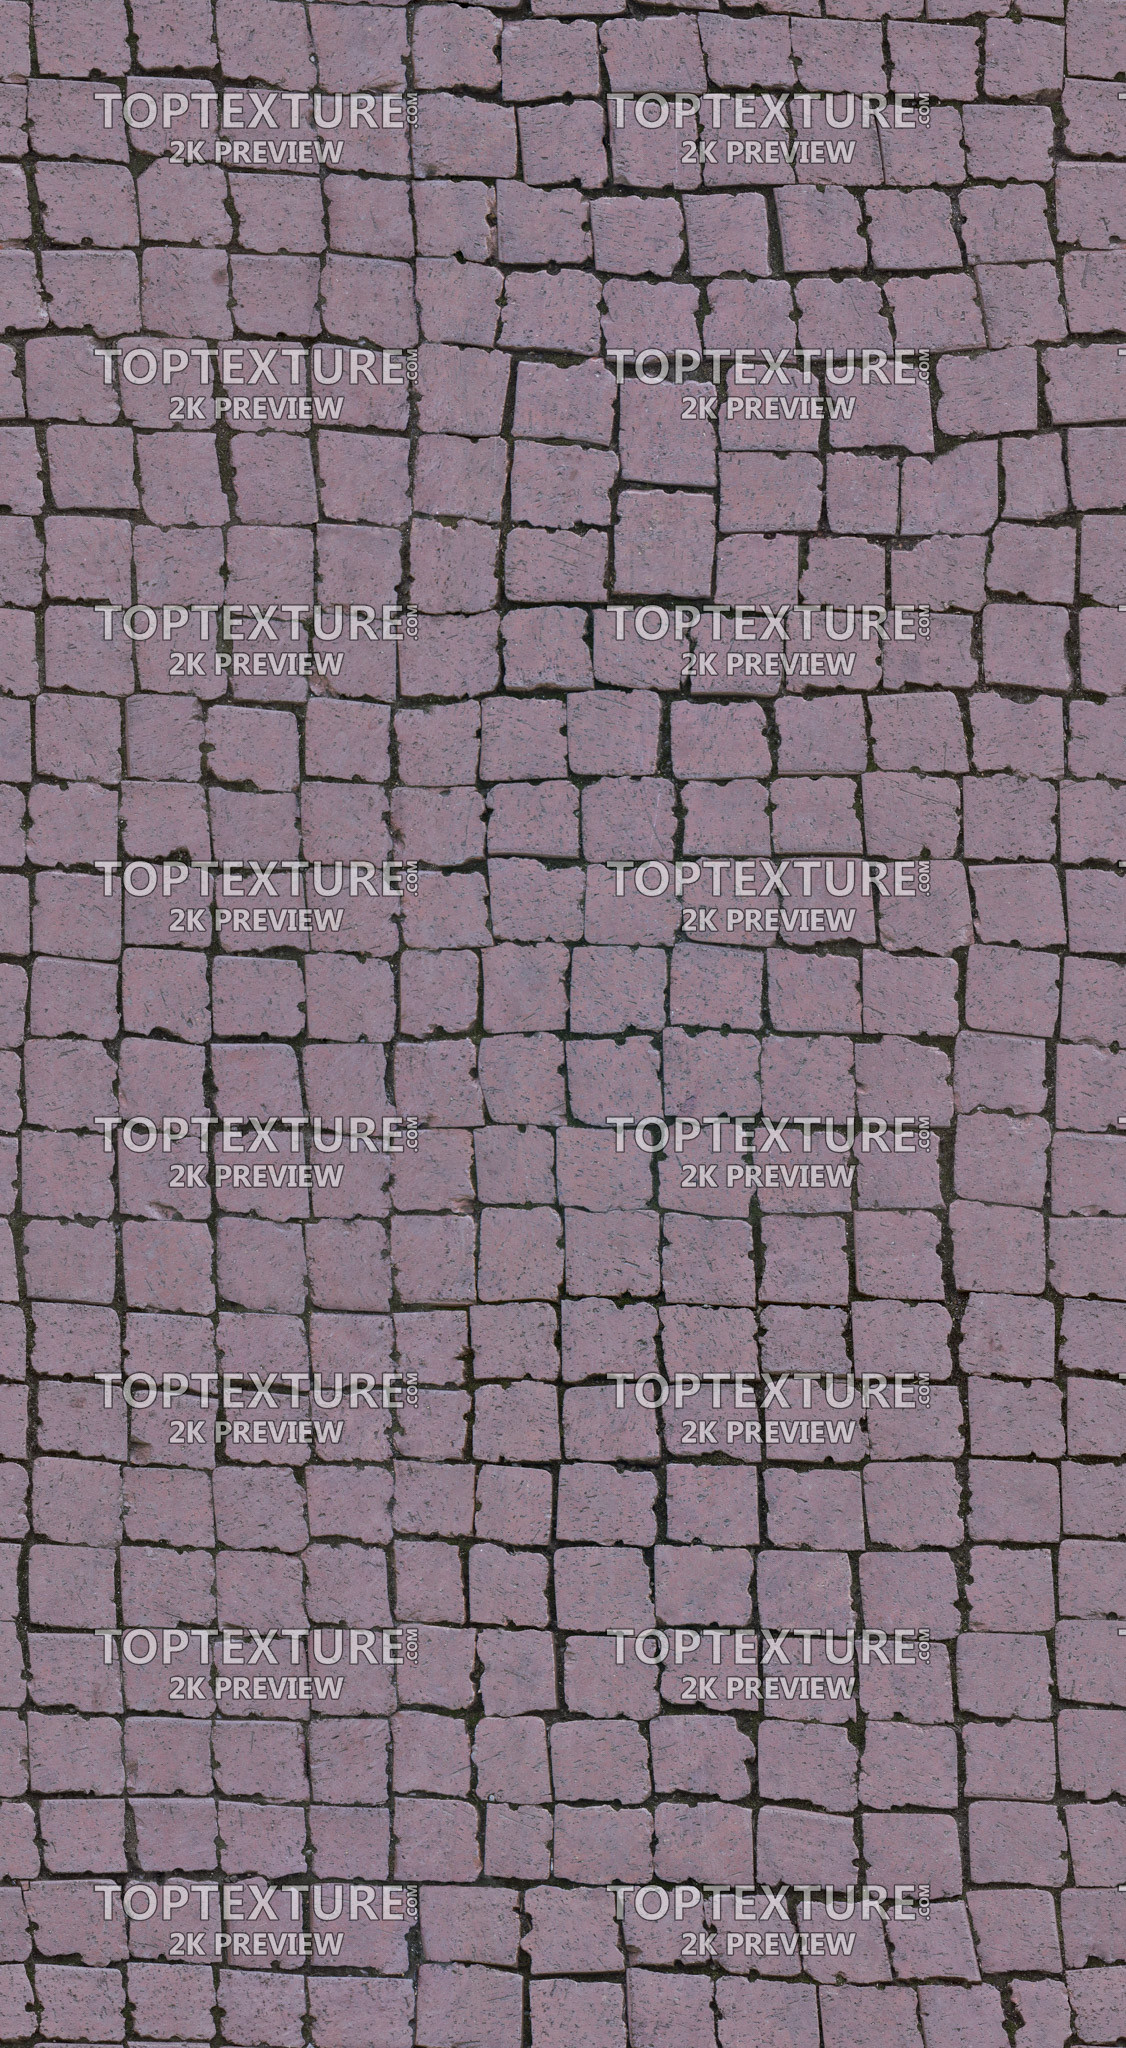 Red Square Stone Ground Bricks - 2K preview